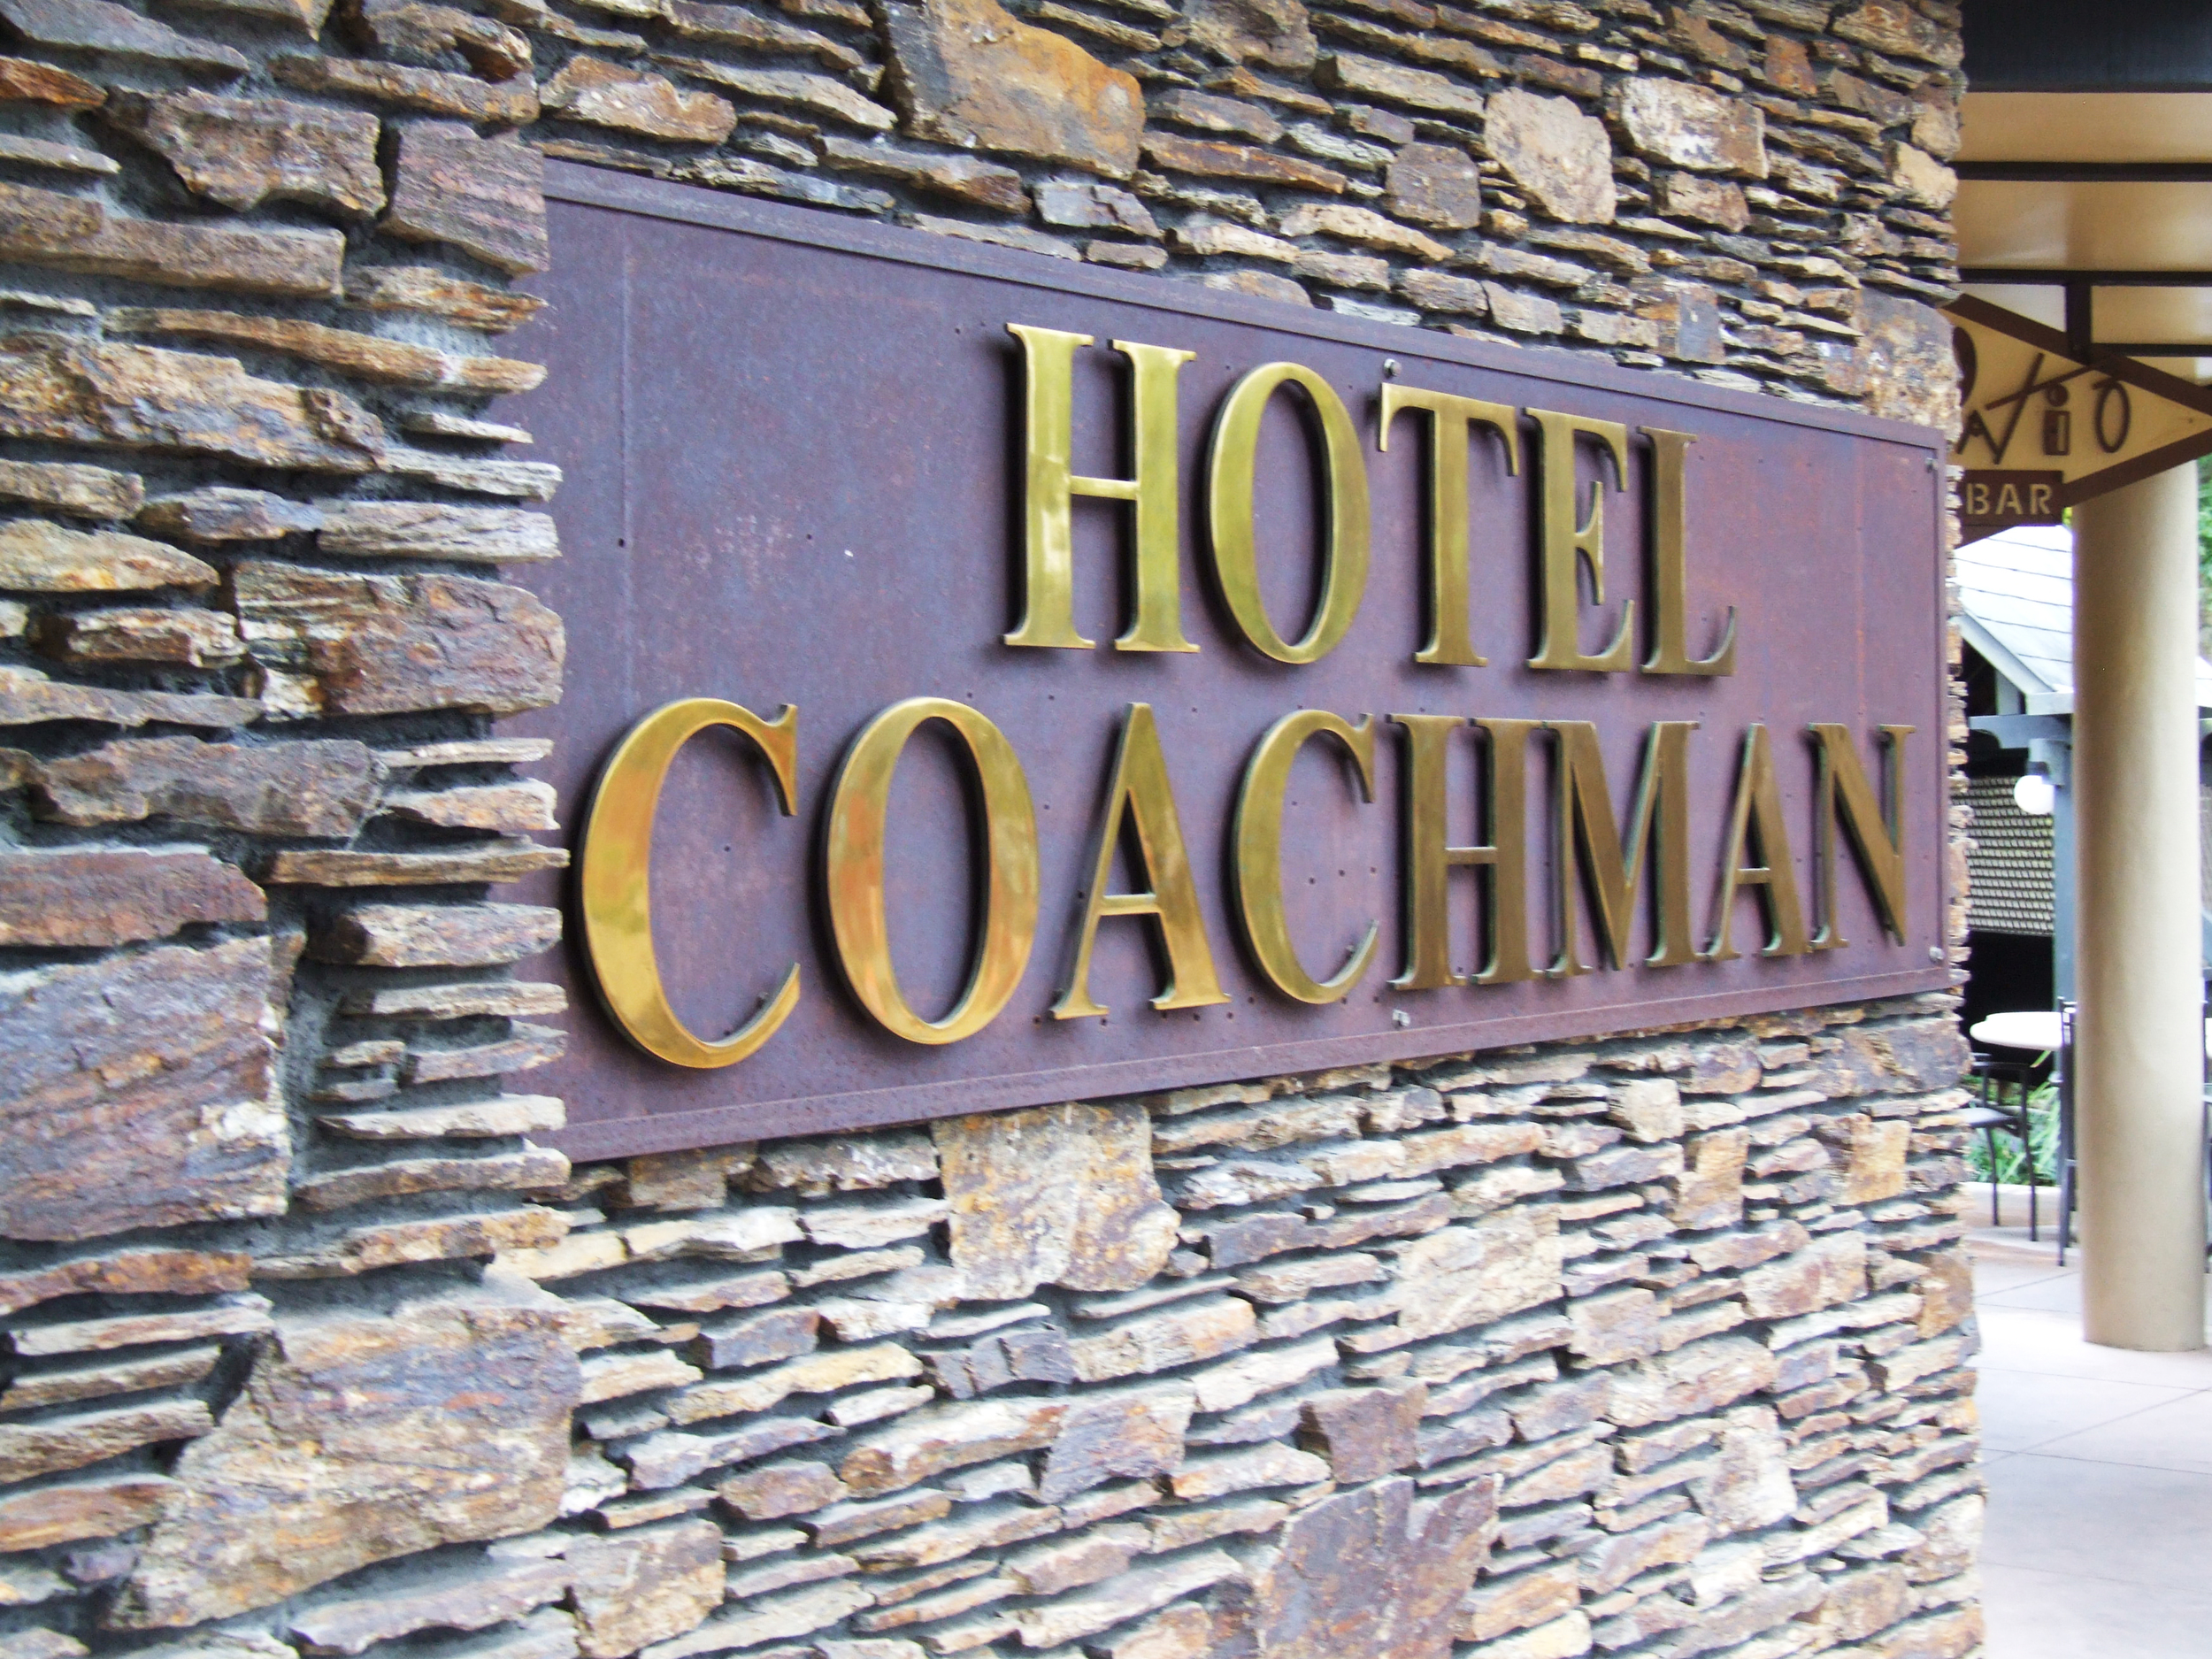 Hotel Coachman Exterior 7.jpg